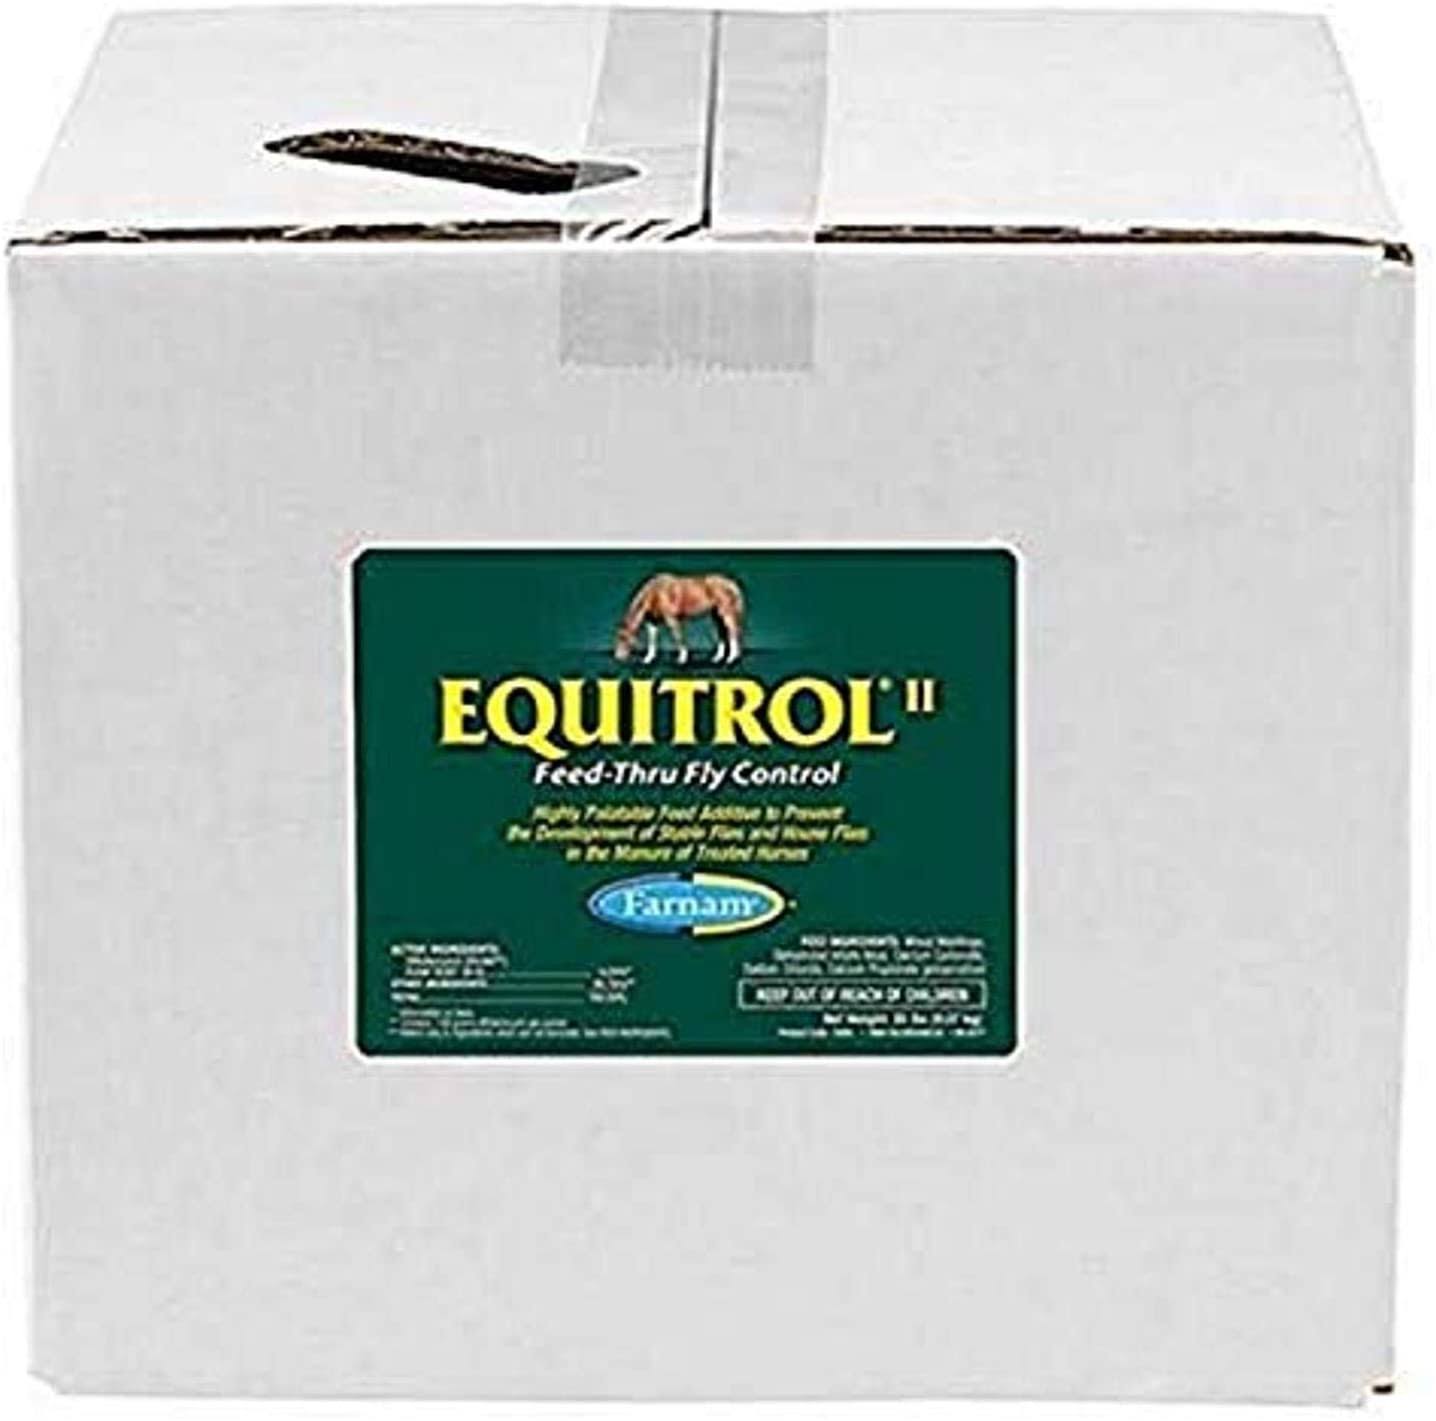 (9.1kg) - Equitrol II Feed-Thru Fly Control For Horses